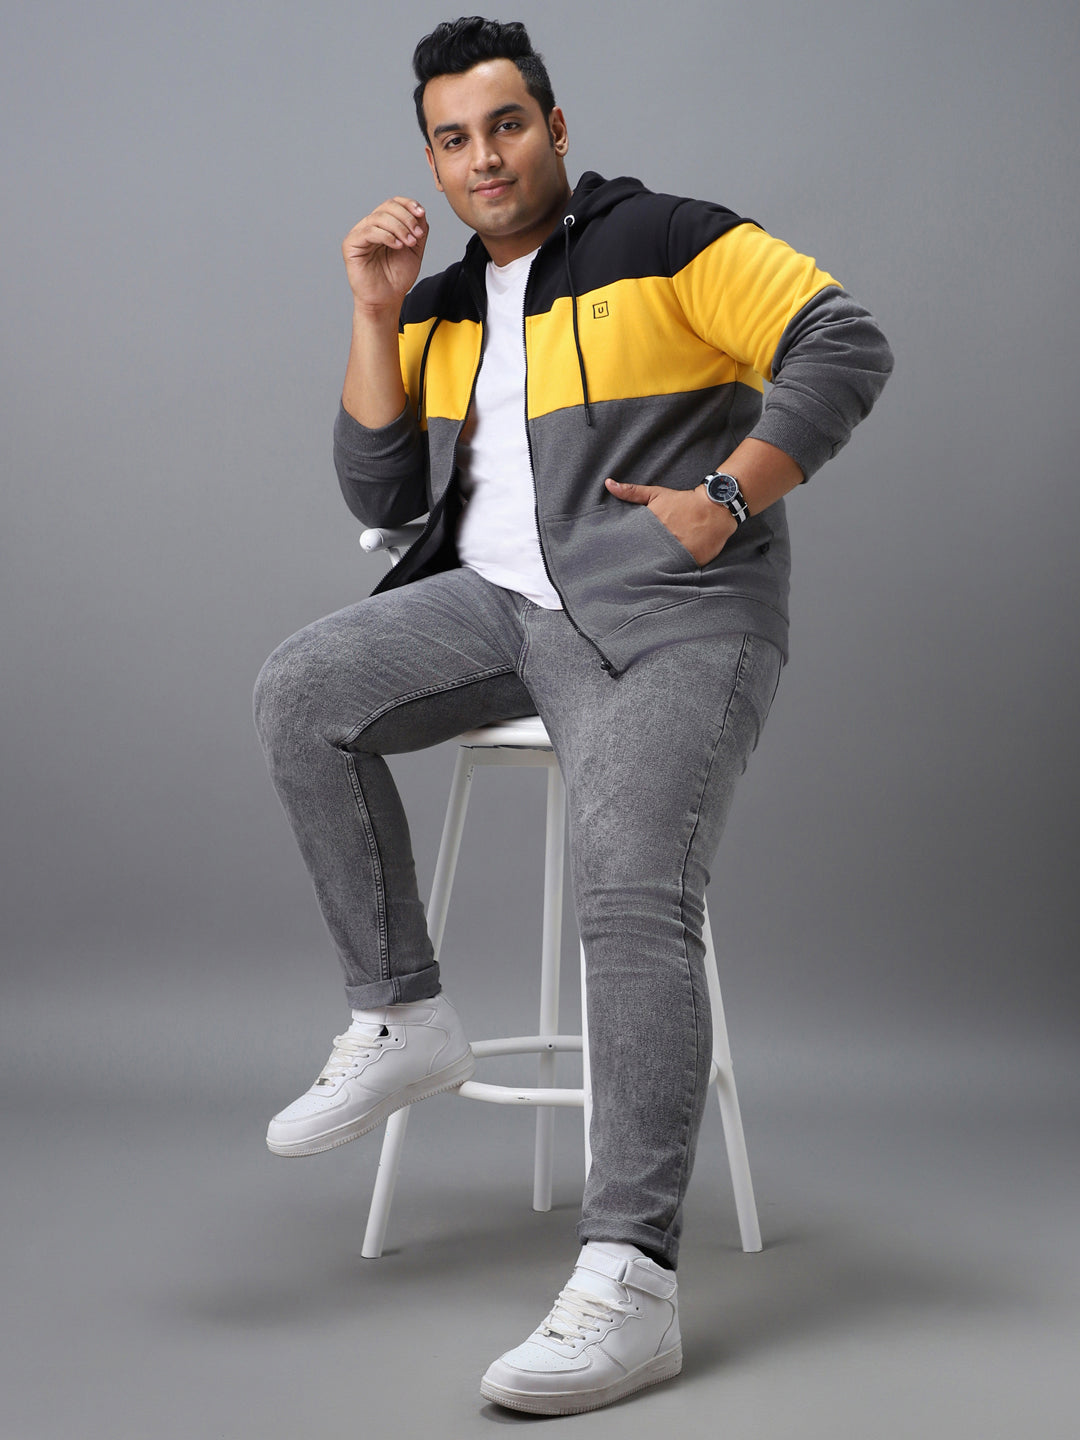 Urbano Plus Men's Black, Yellow, Charcoal Cotton Full Sleeve Zippered Hooded Sweatshirt